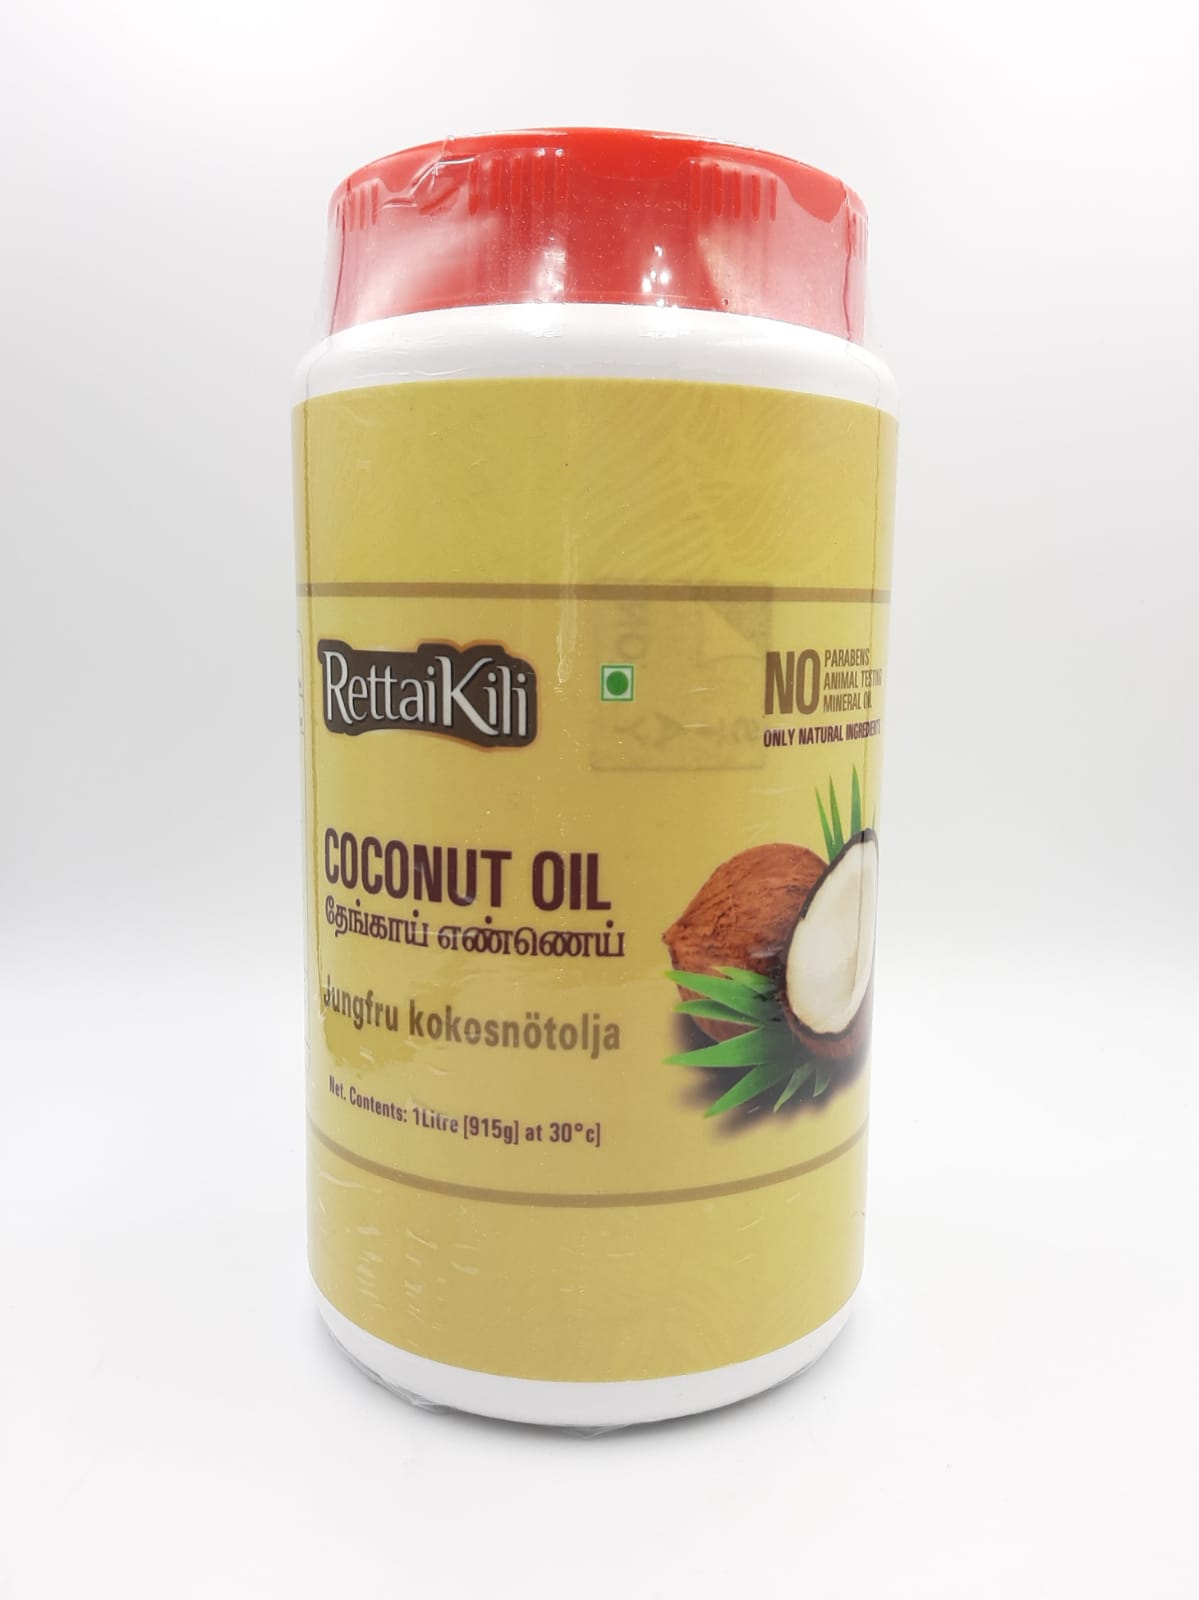 Rettai Kili Coconut Oil 1L – Spice on Wheels